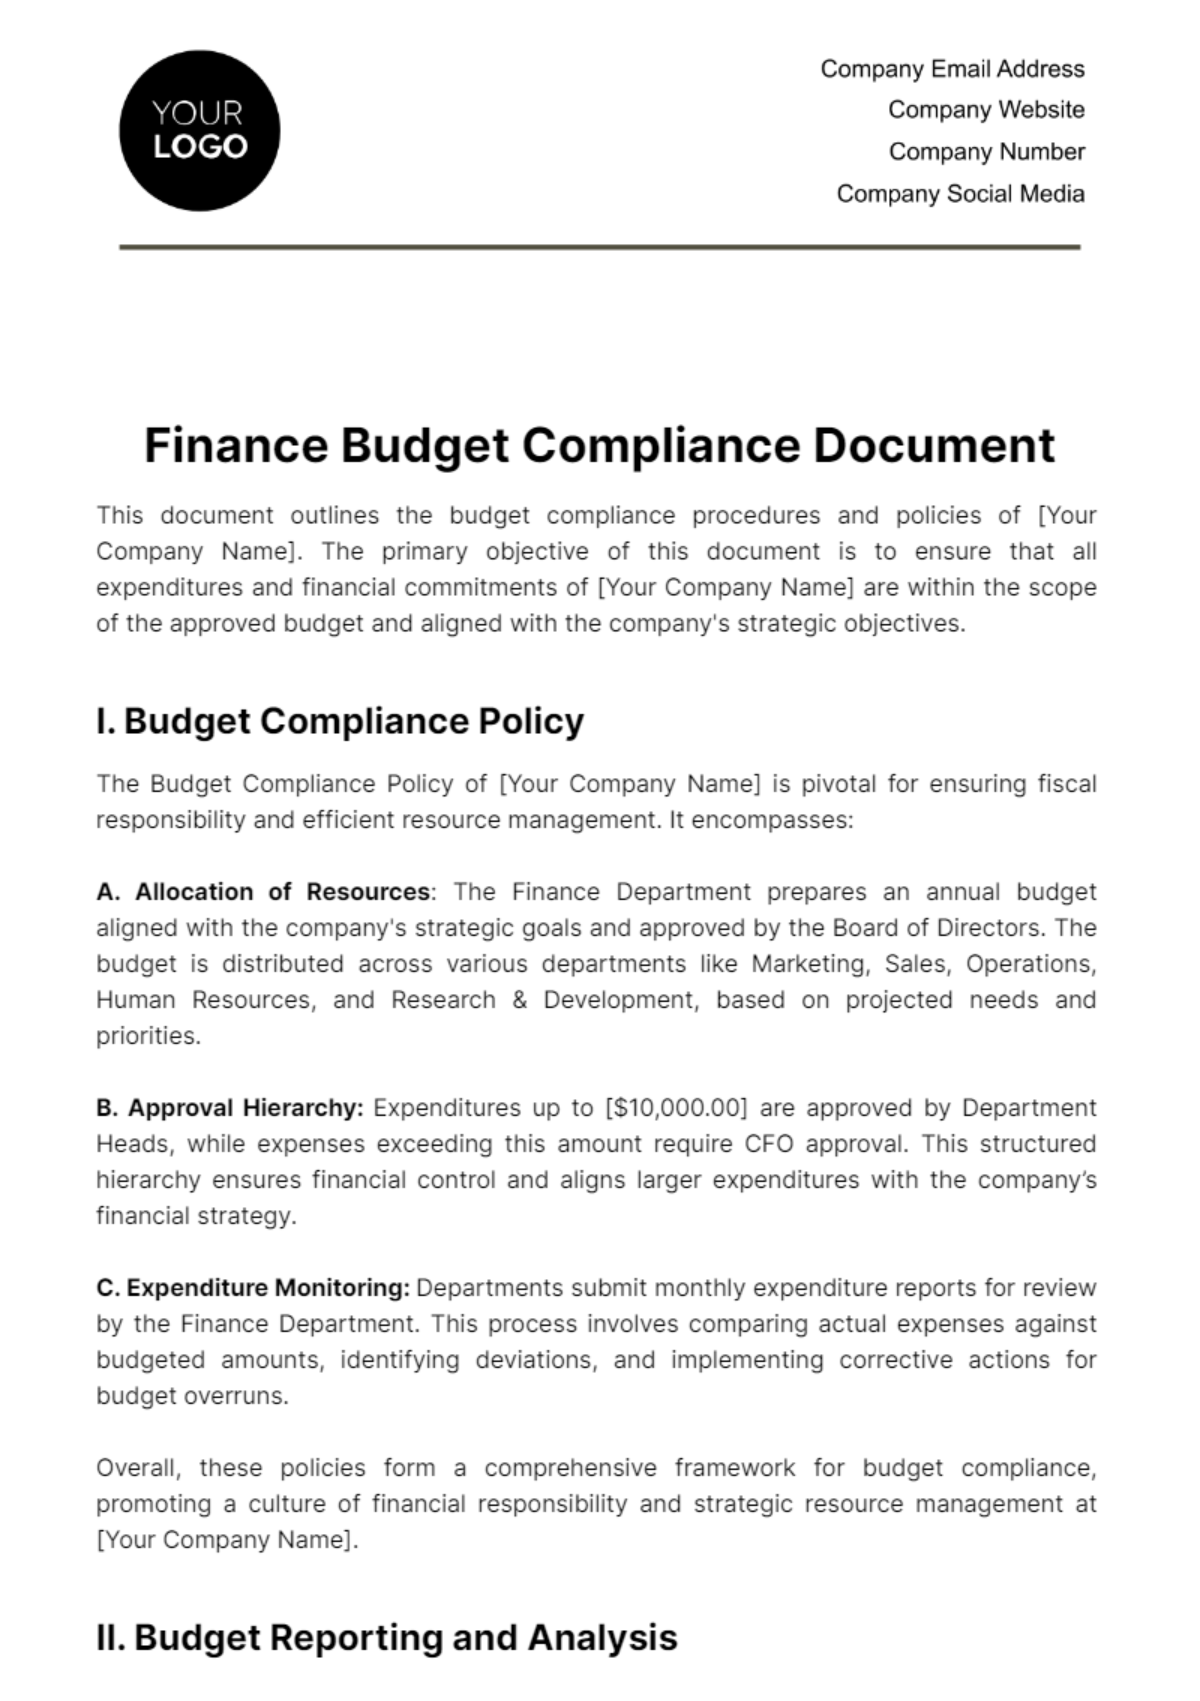 Free Finance Budget Compliance Document Template